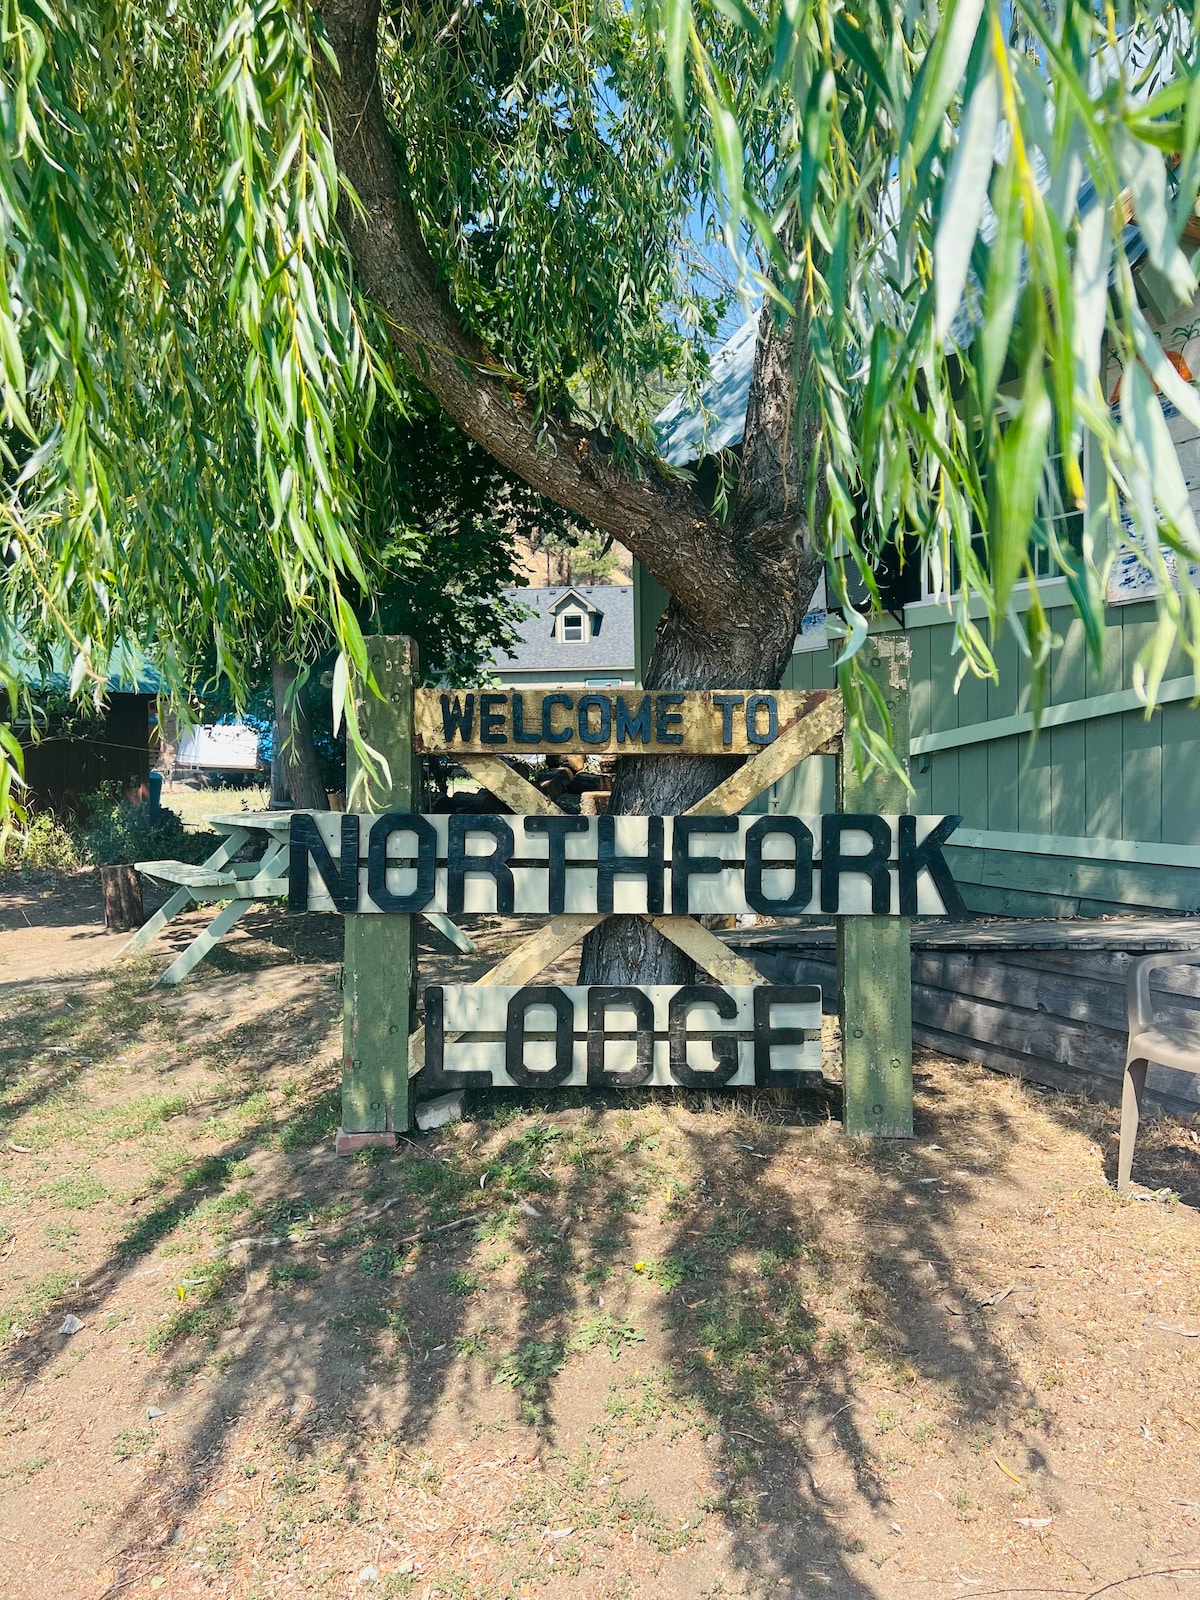 NorthFork Lodge Cabin #1 “The Willow”